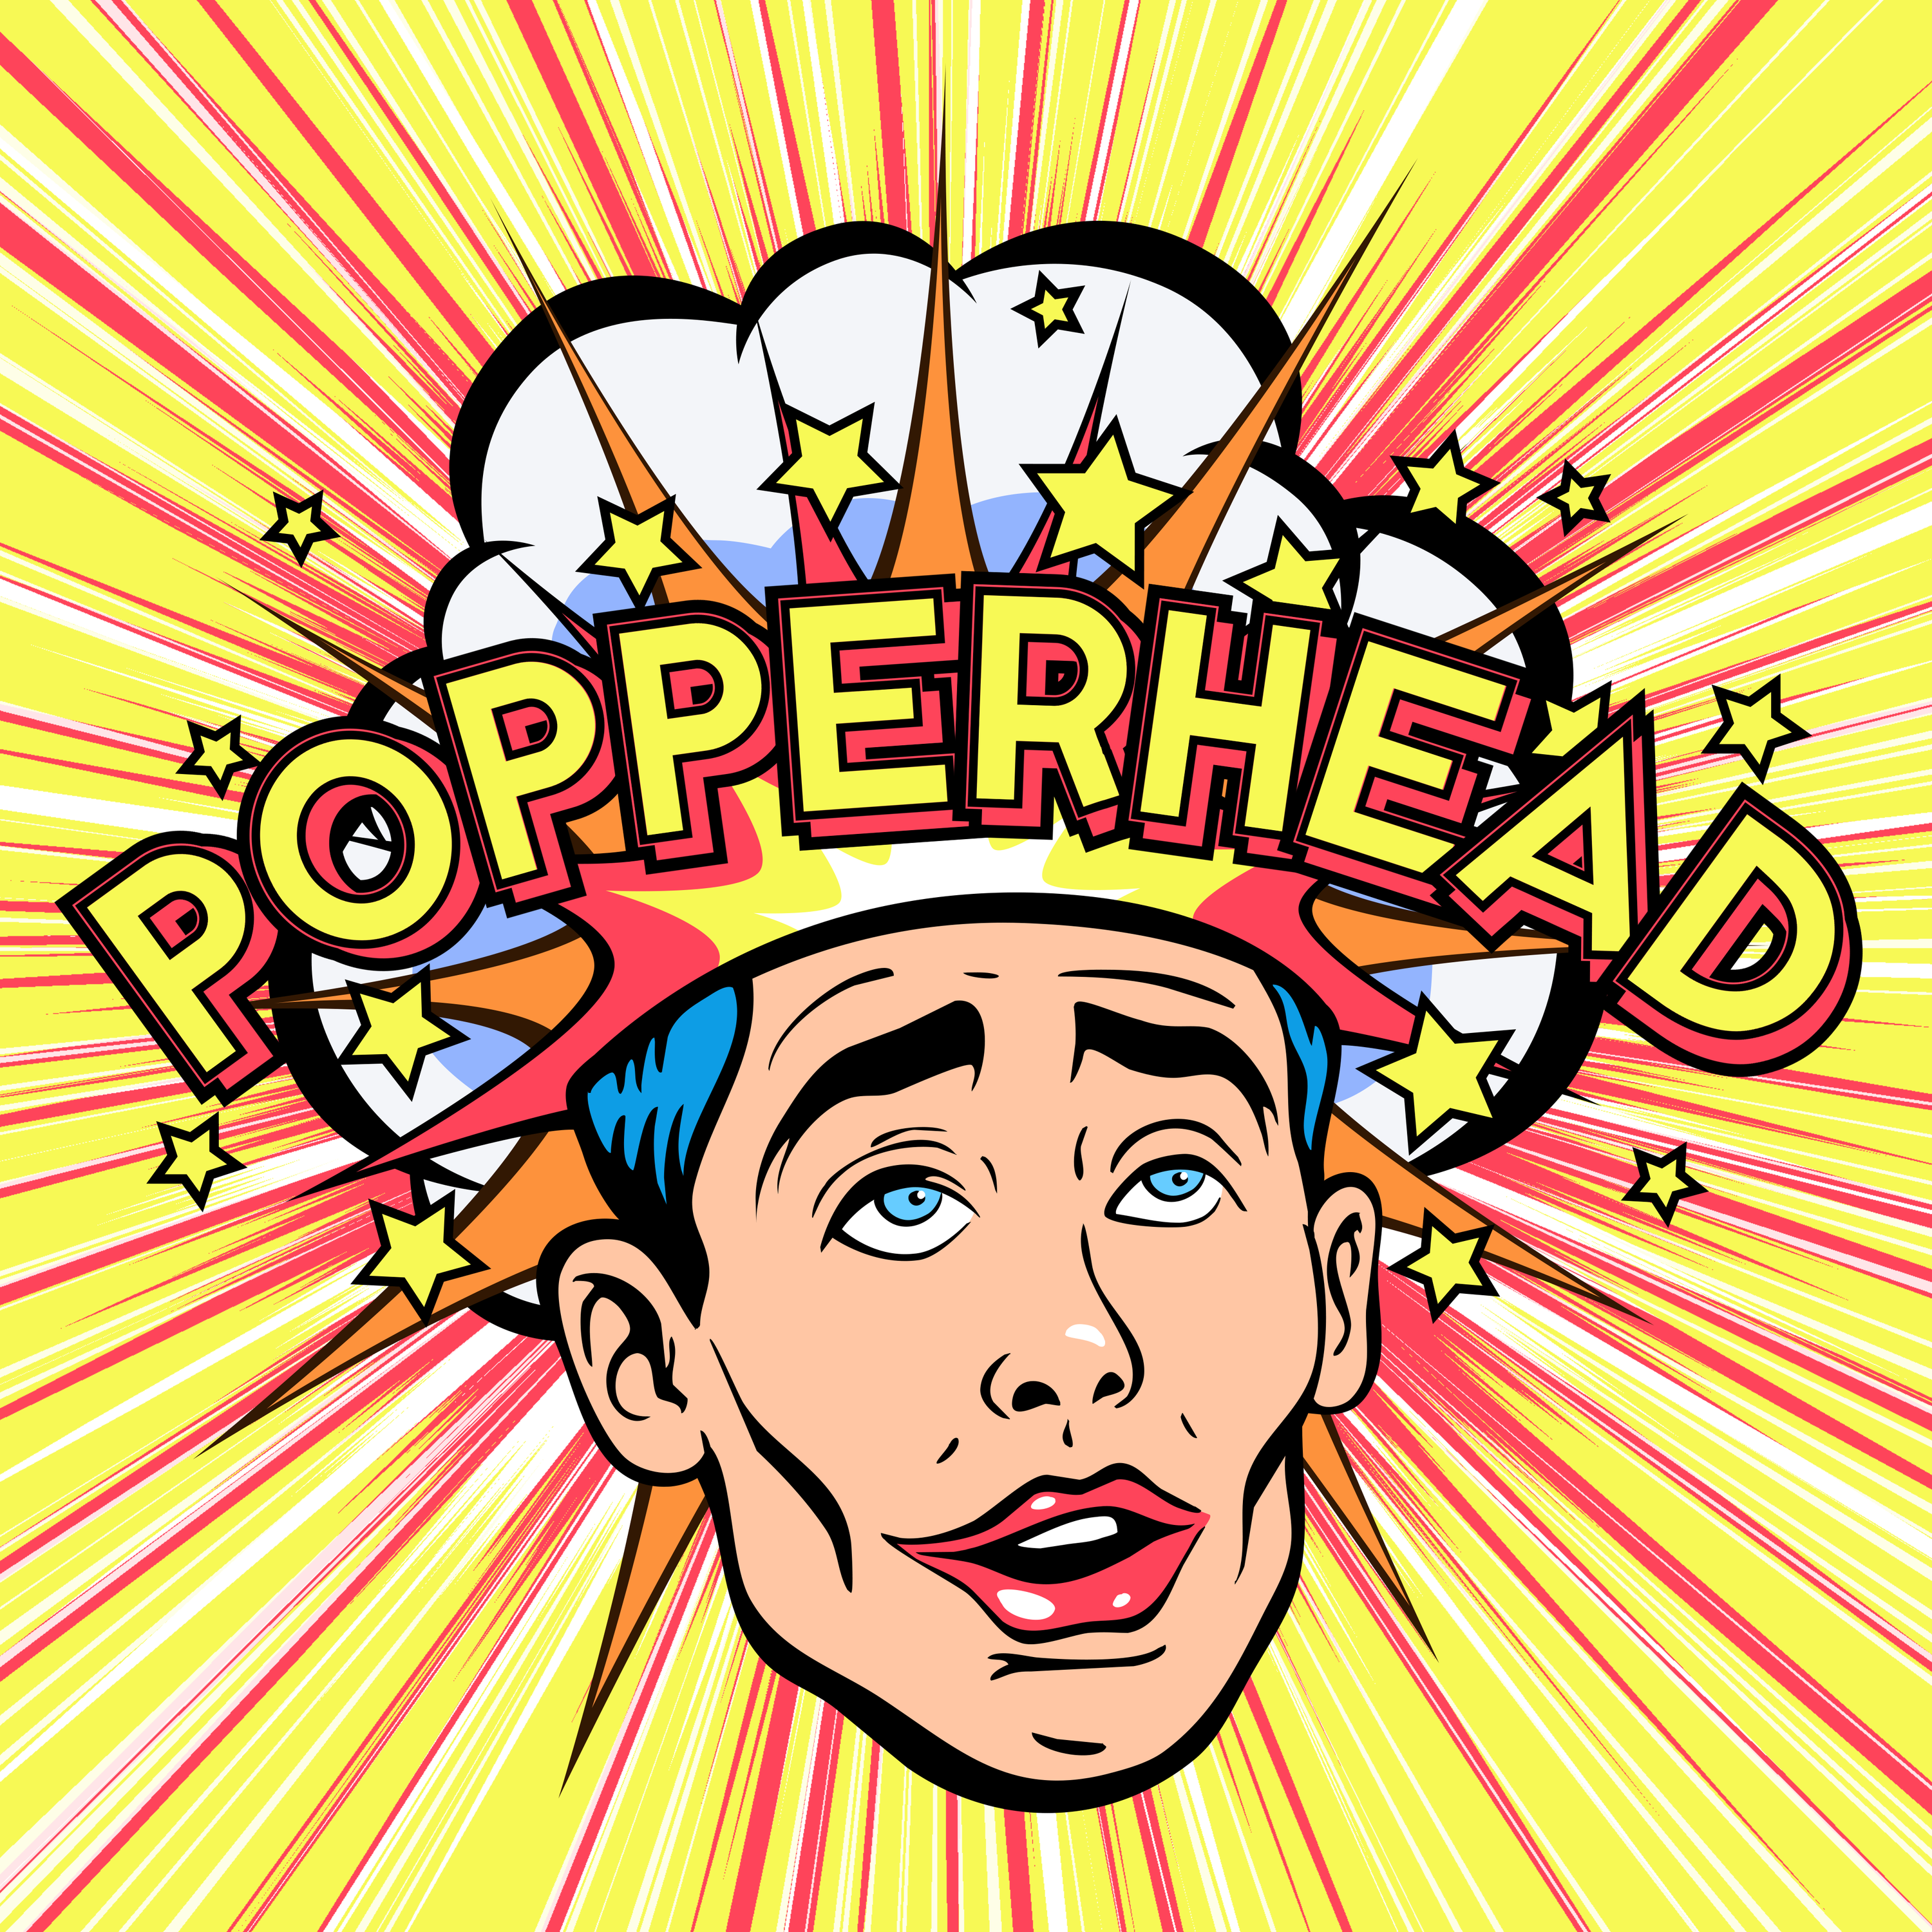 Popperhead